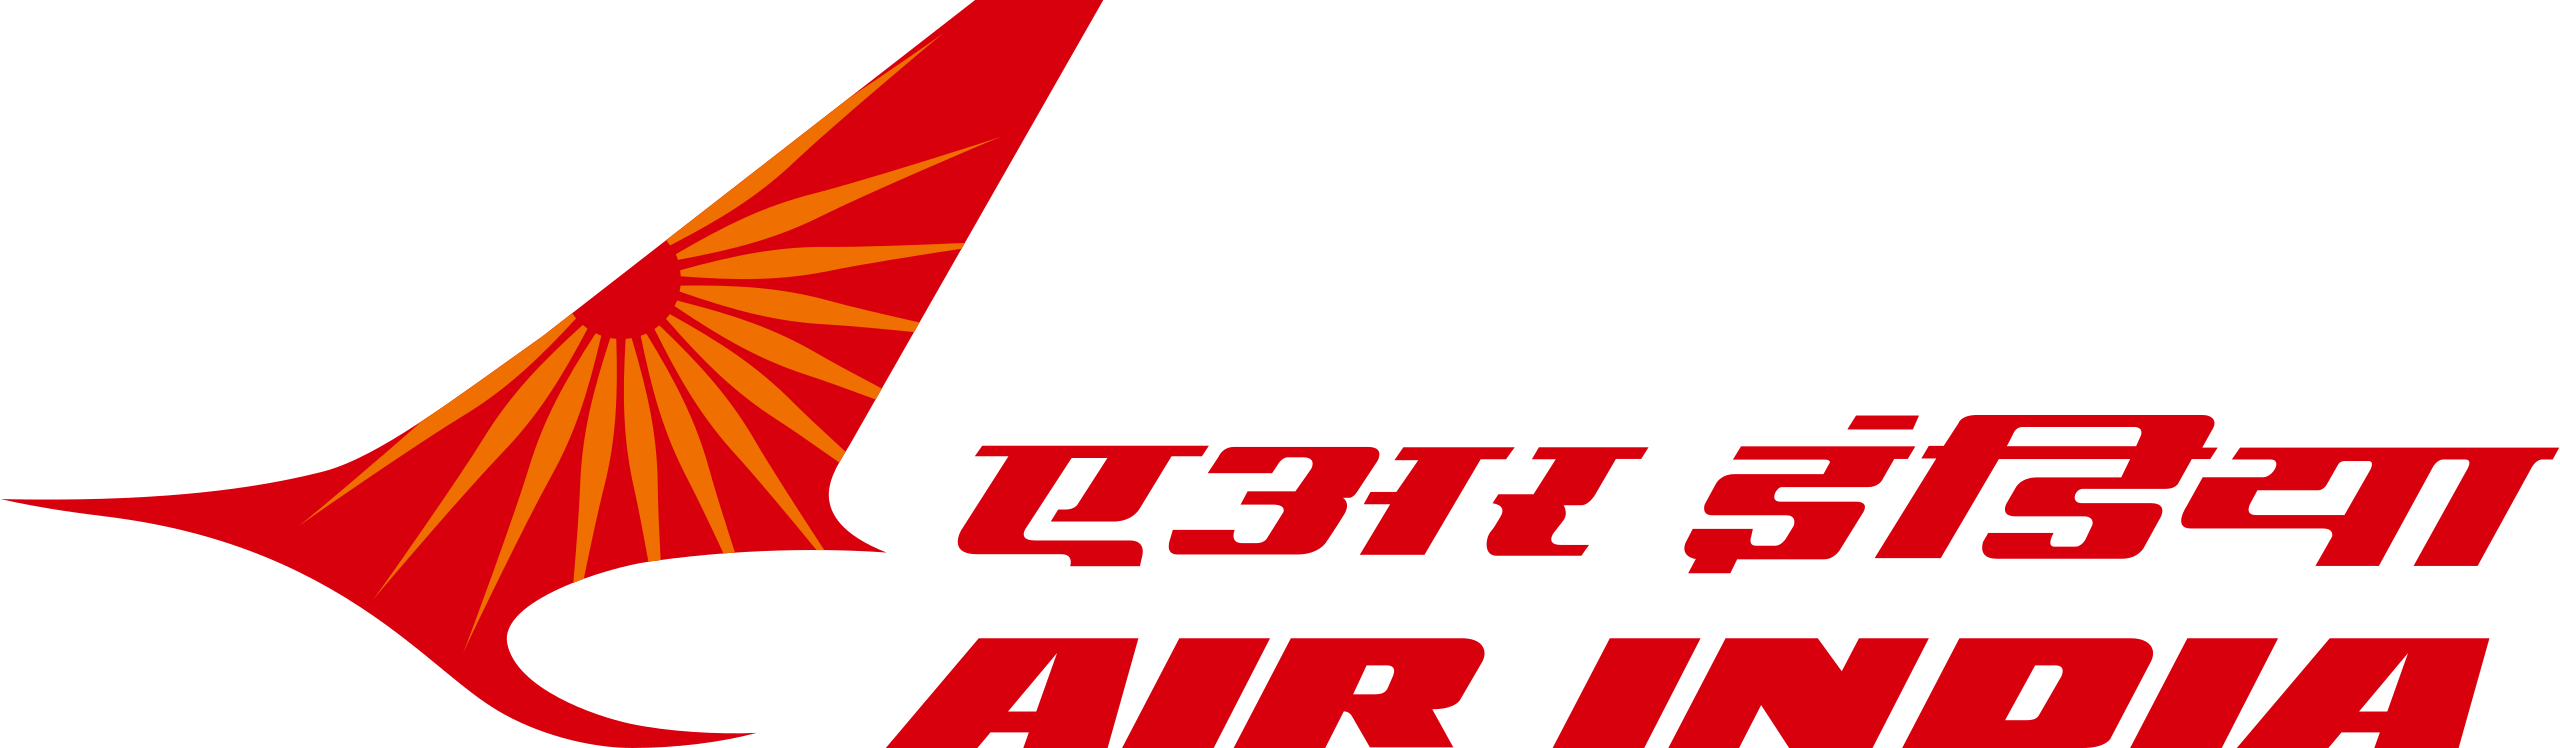 Air_India